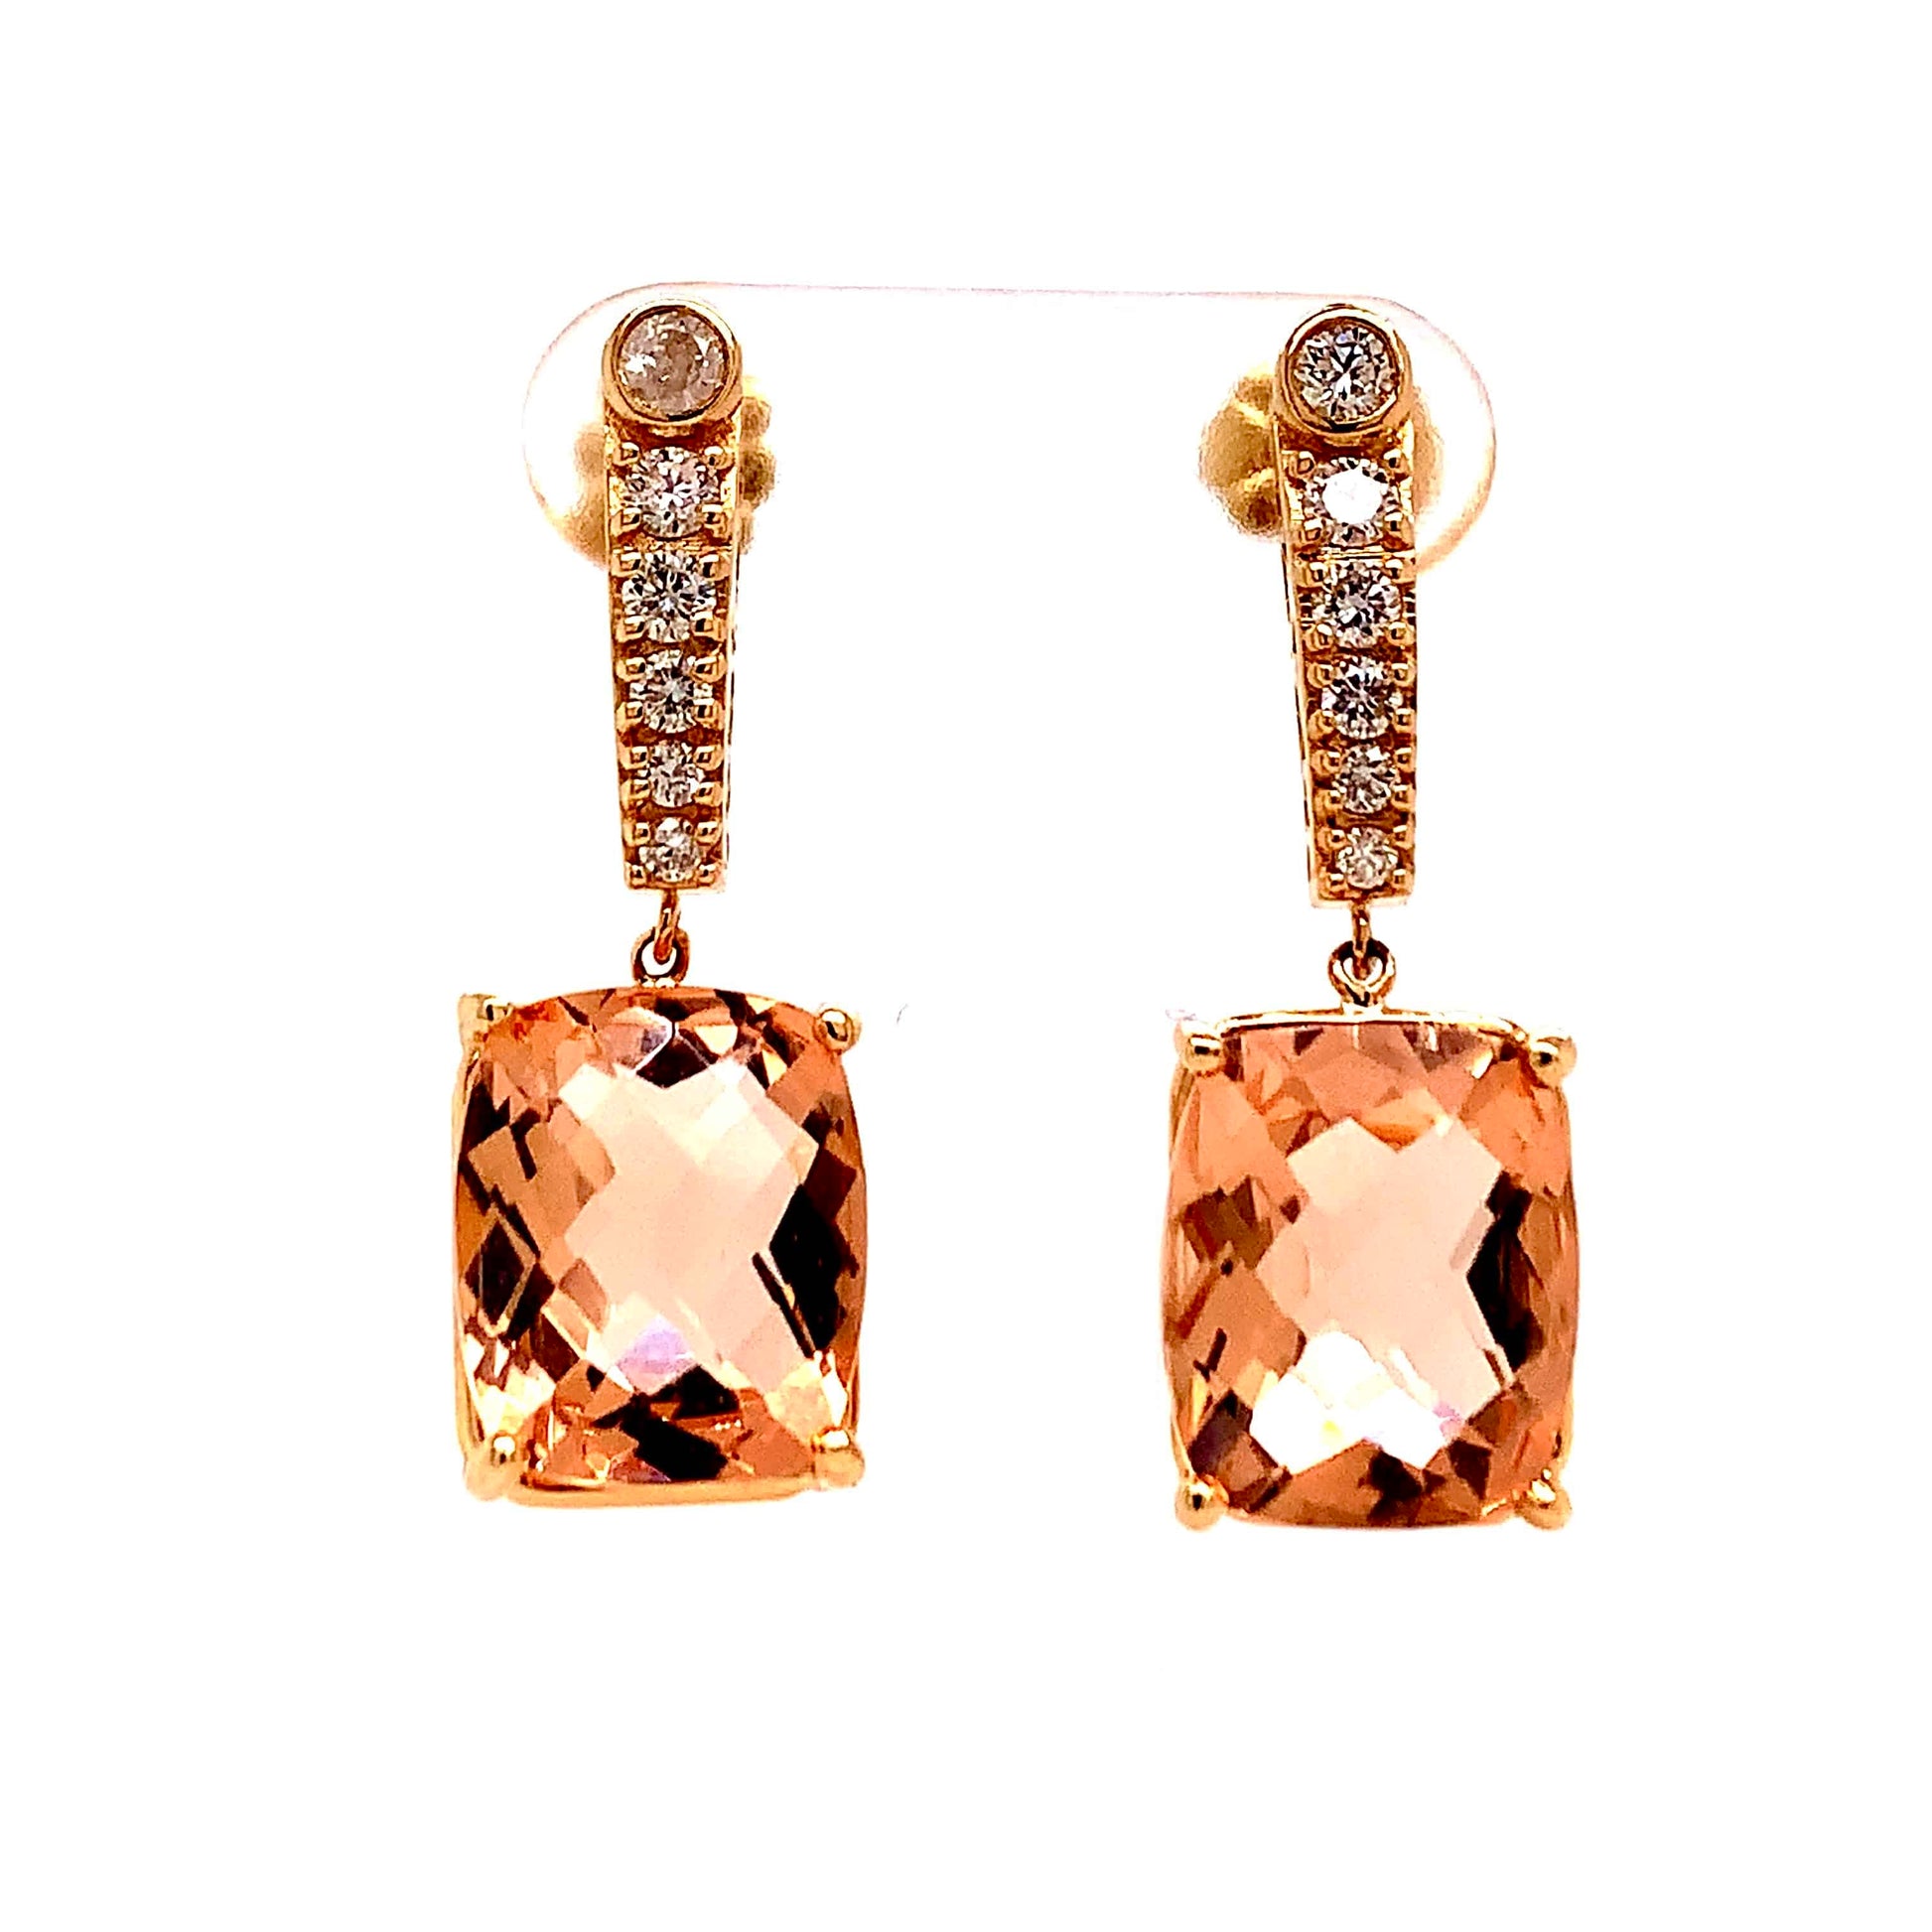 Natural Morganite Diamond Earrings 14k Gold 9.93 TCW Certified $5,950 018685 - Certified Fine Jewelry